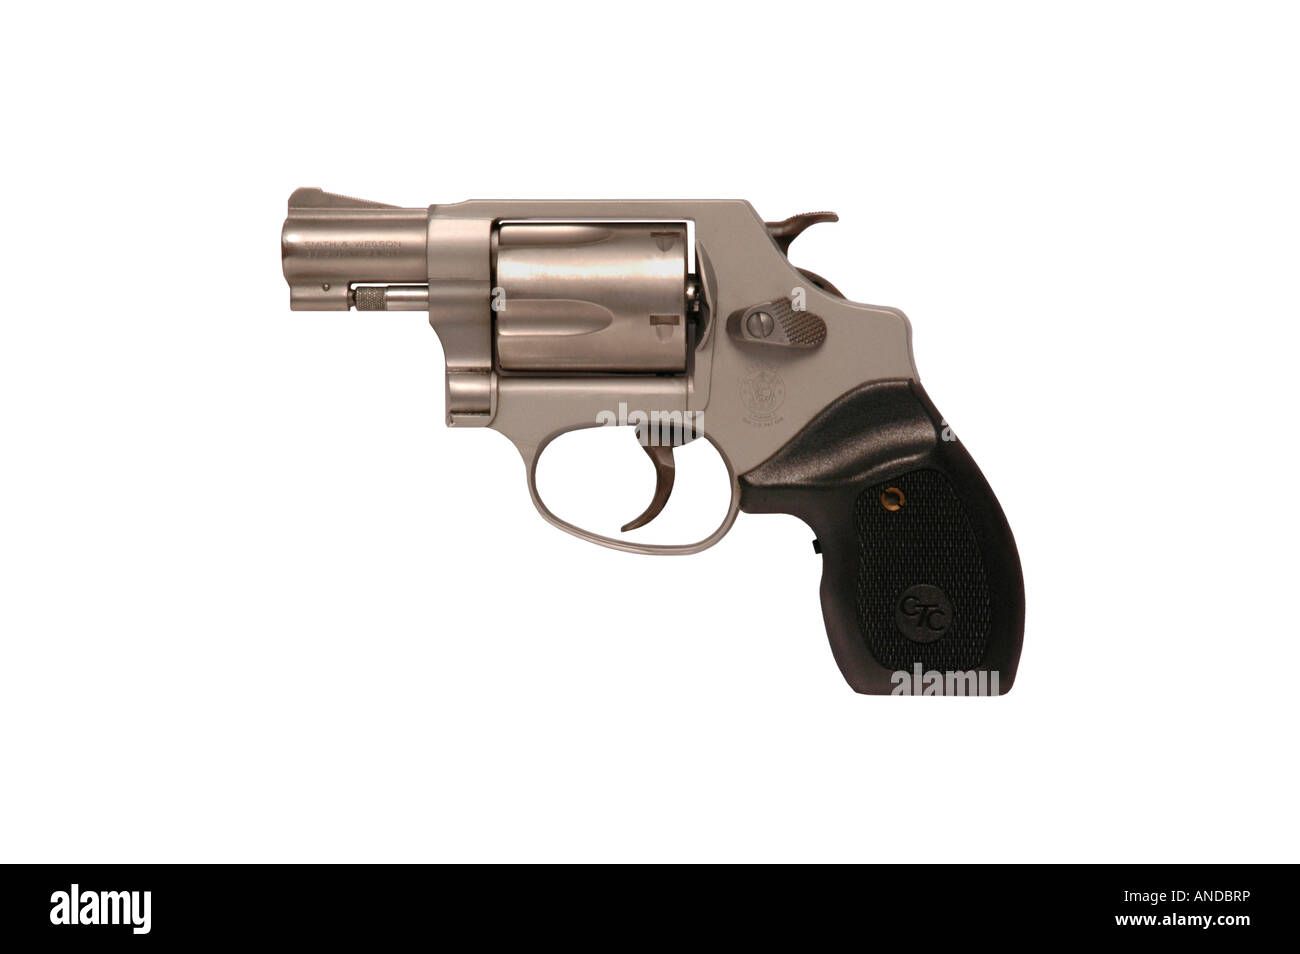 Smith Wesson snub nose police revolver Stock Photo